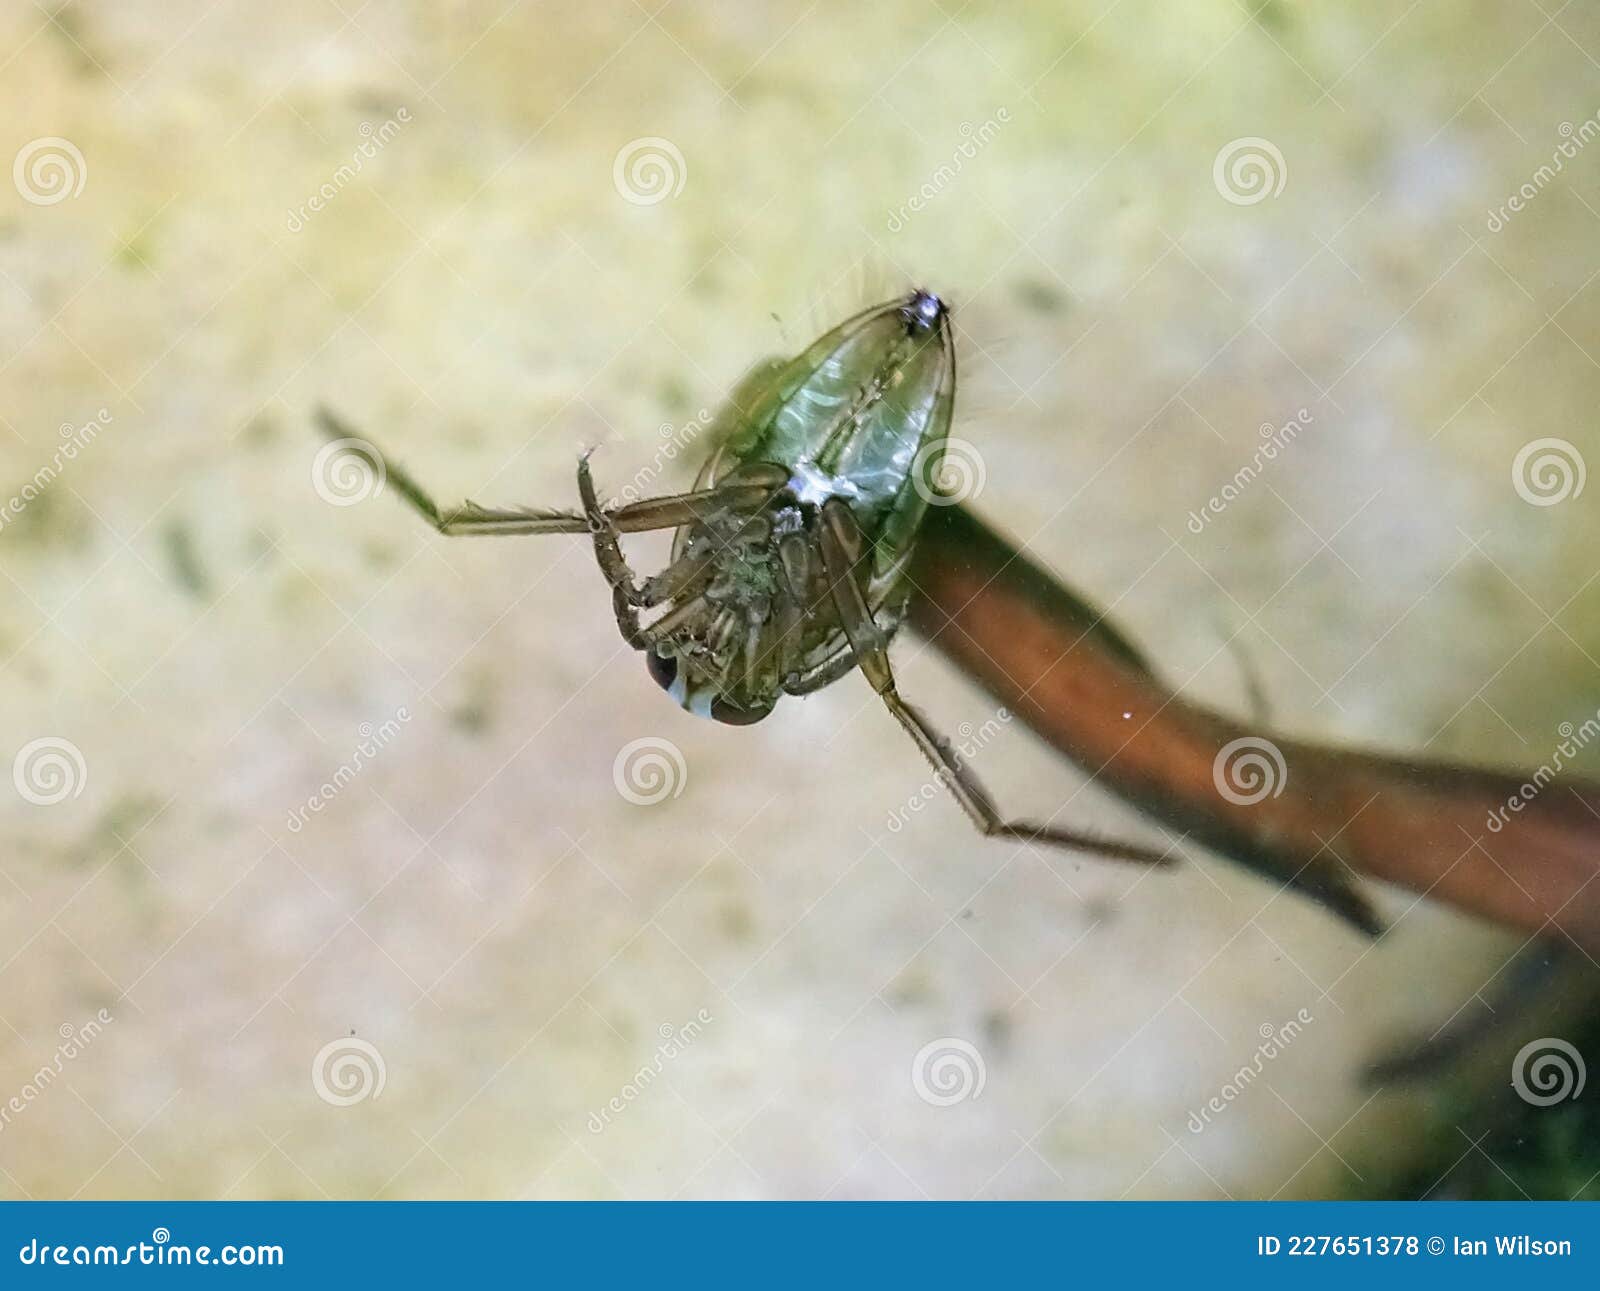 water boatman beetle notonecta glauca